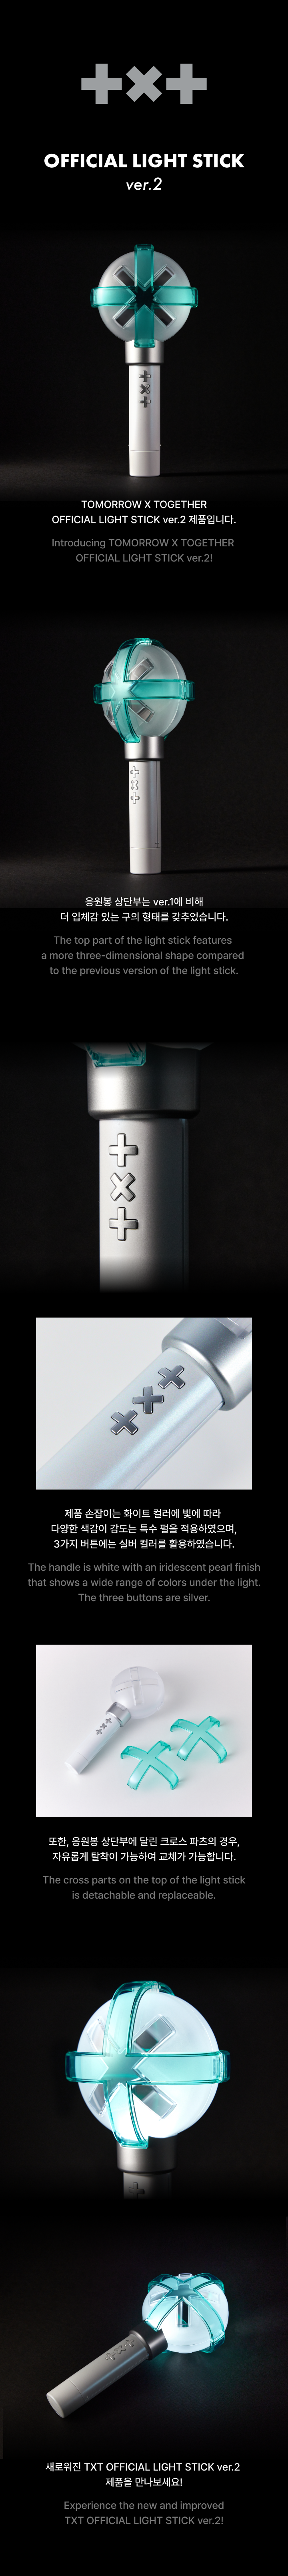 TXT Official Light Stick Version 2